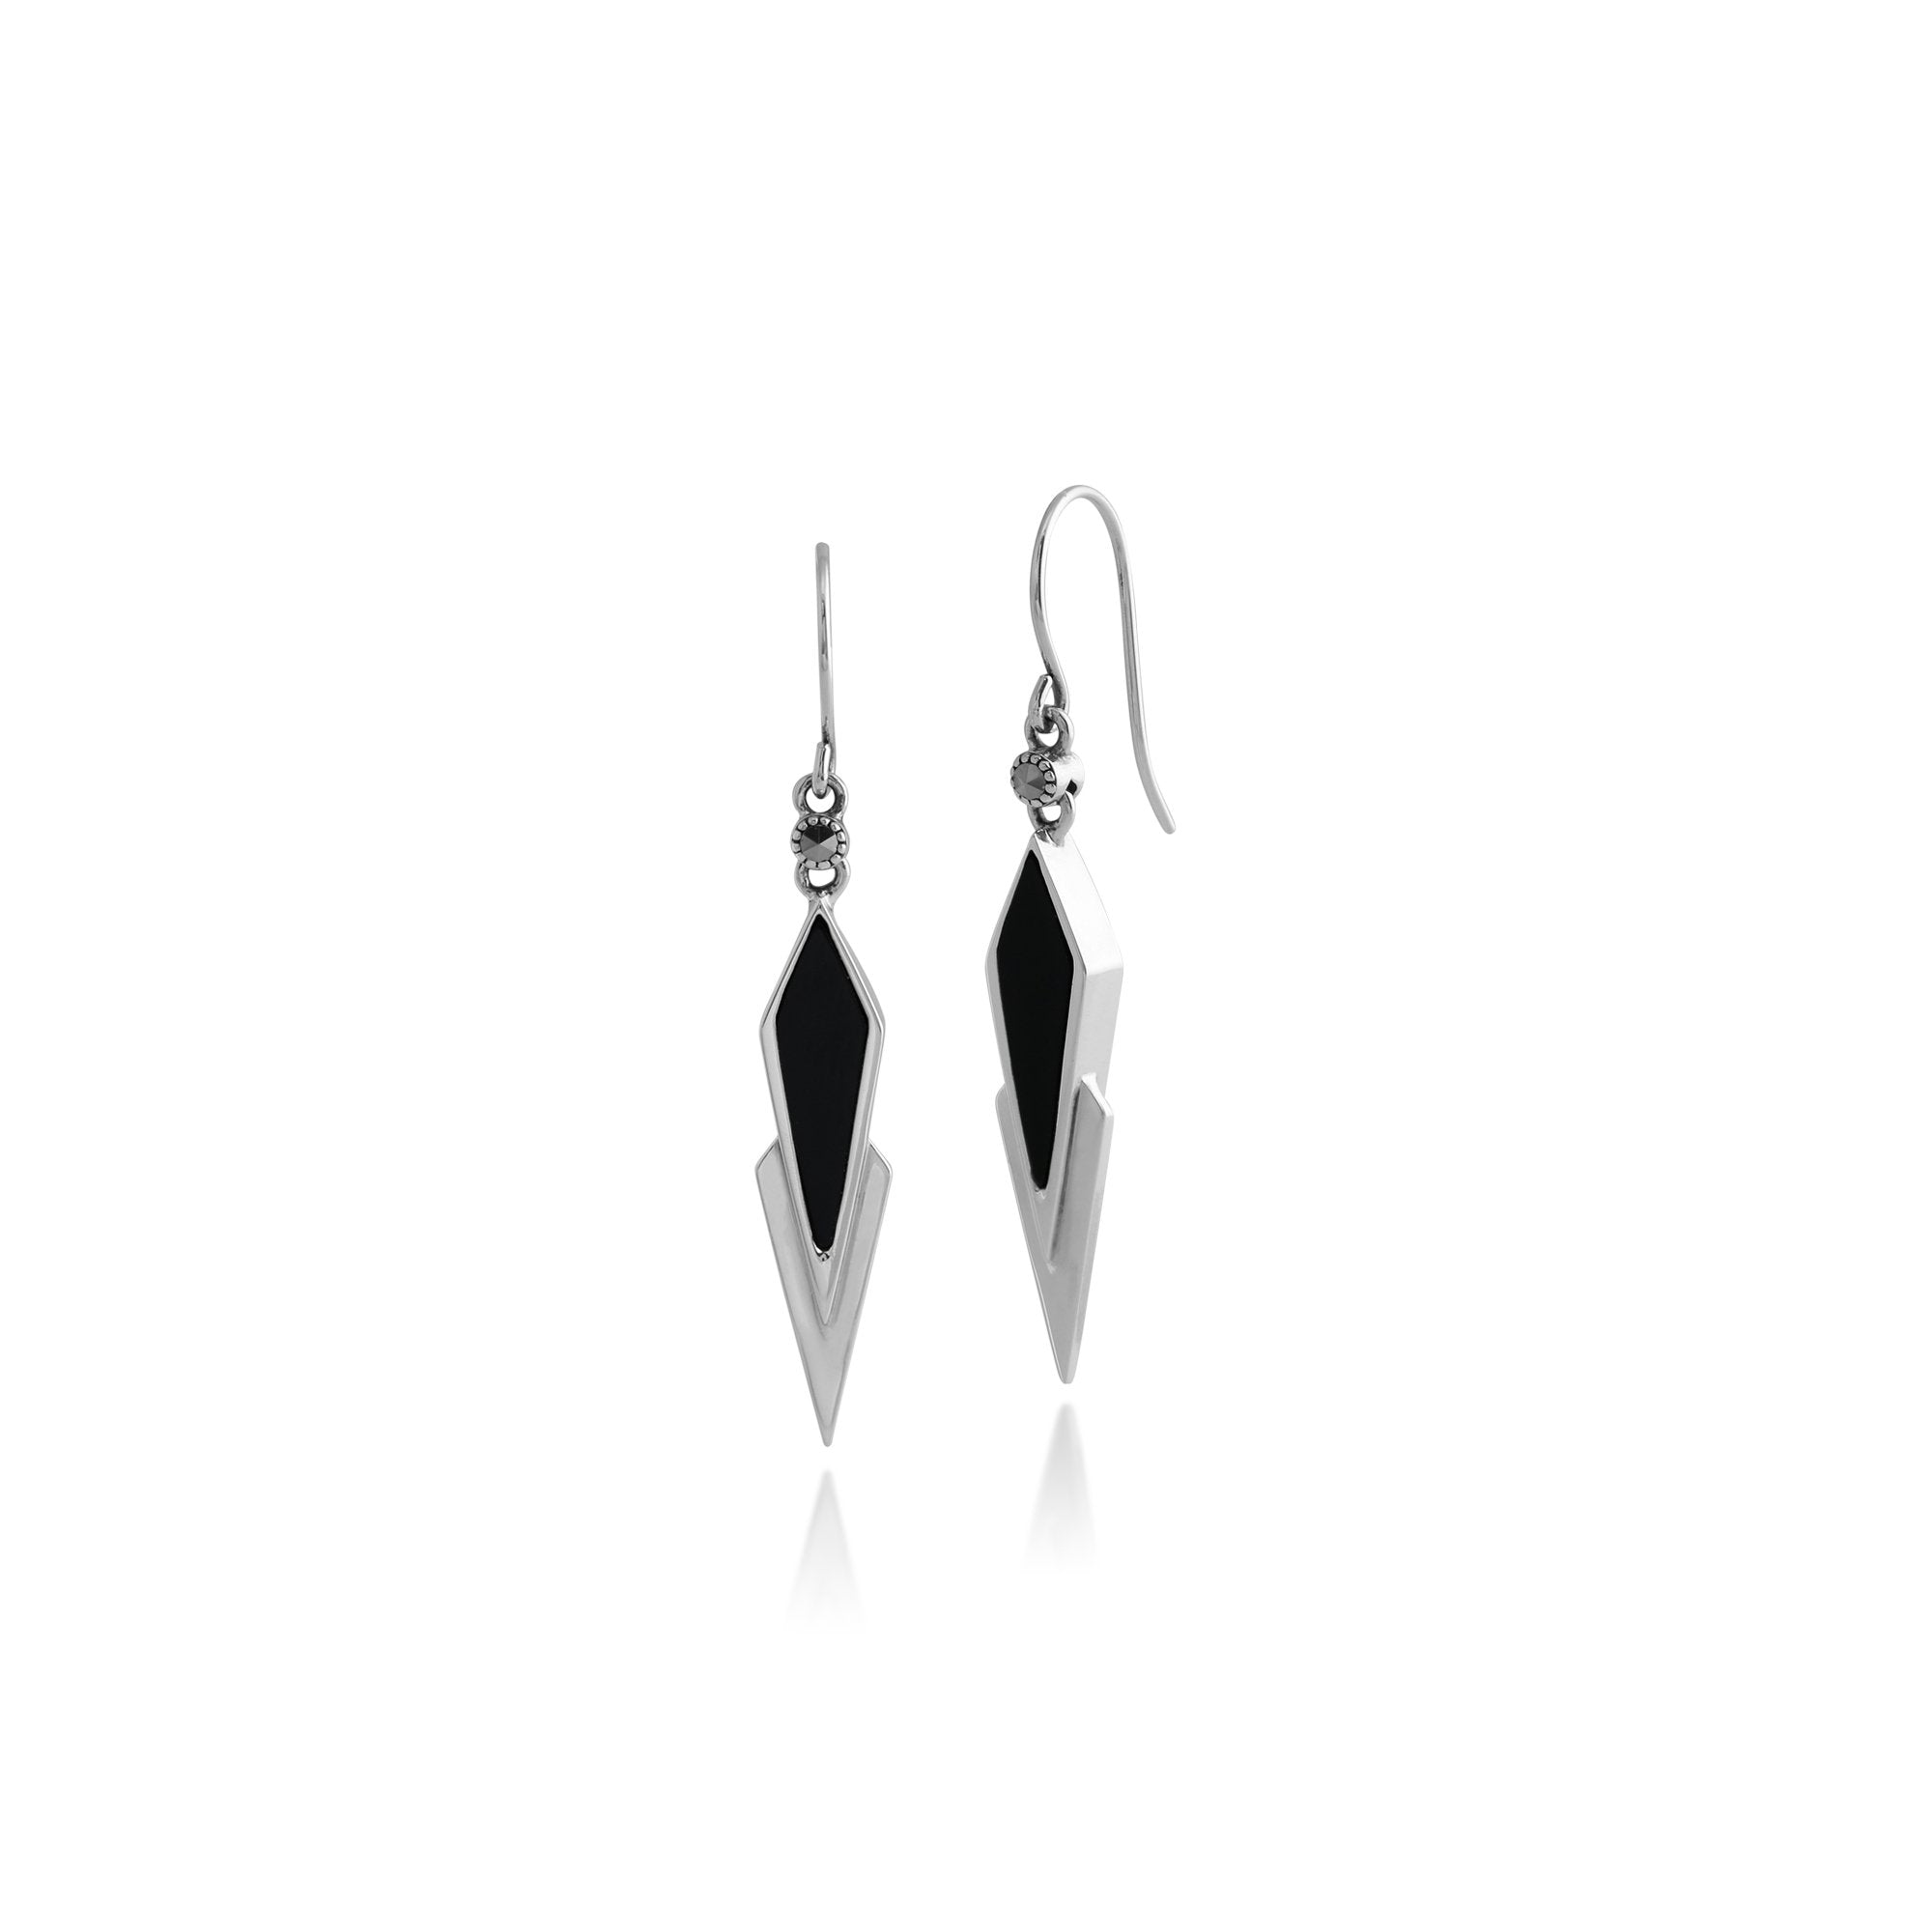 Art Deco Style Black Onyx & Marcasite Triangular Drop Earrings in 925 Sterling Silver